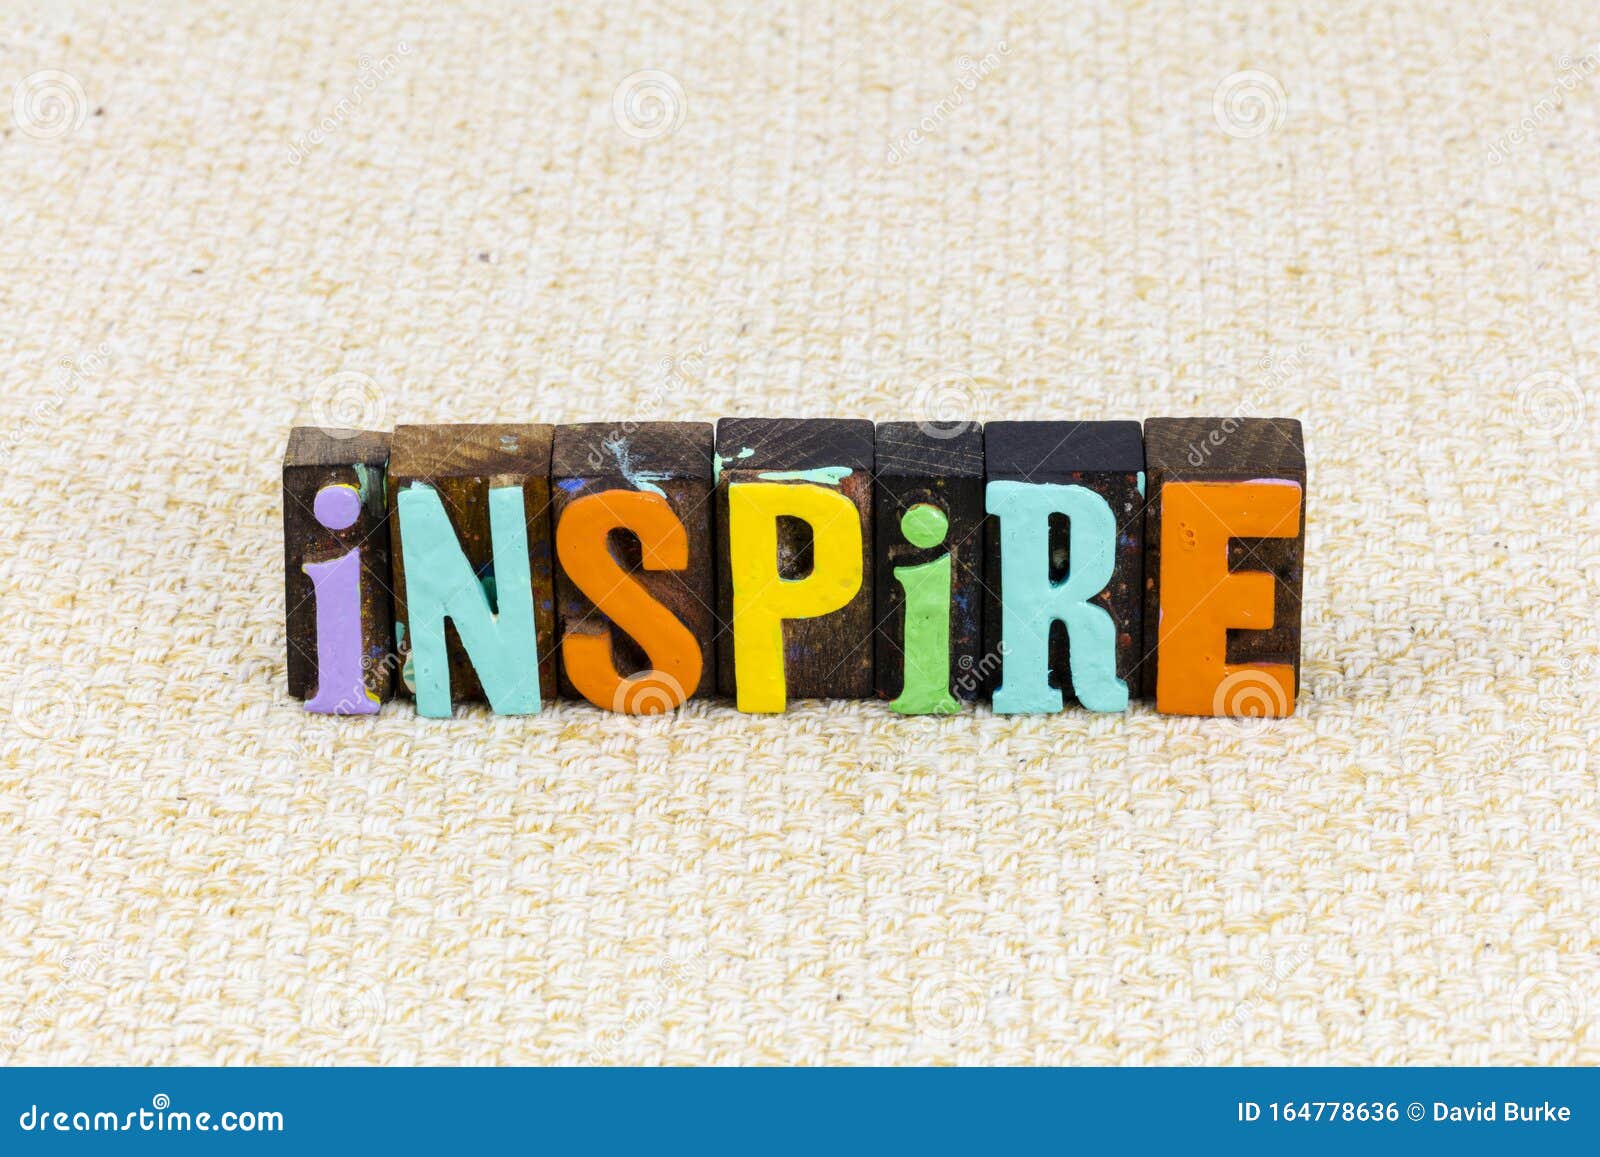 inspire inspiration positive lifestyle happy freedom dream imagination